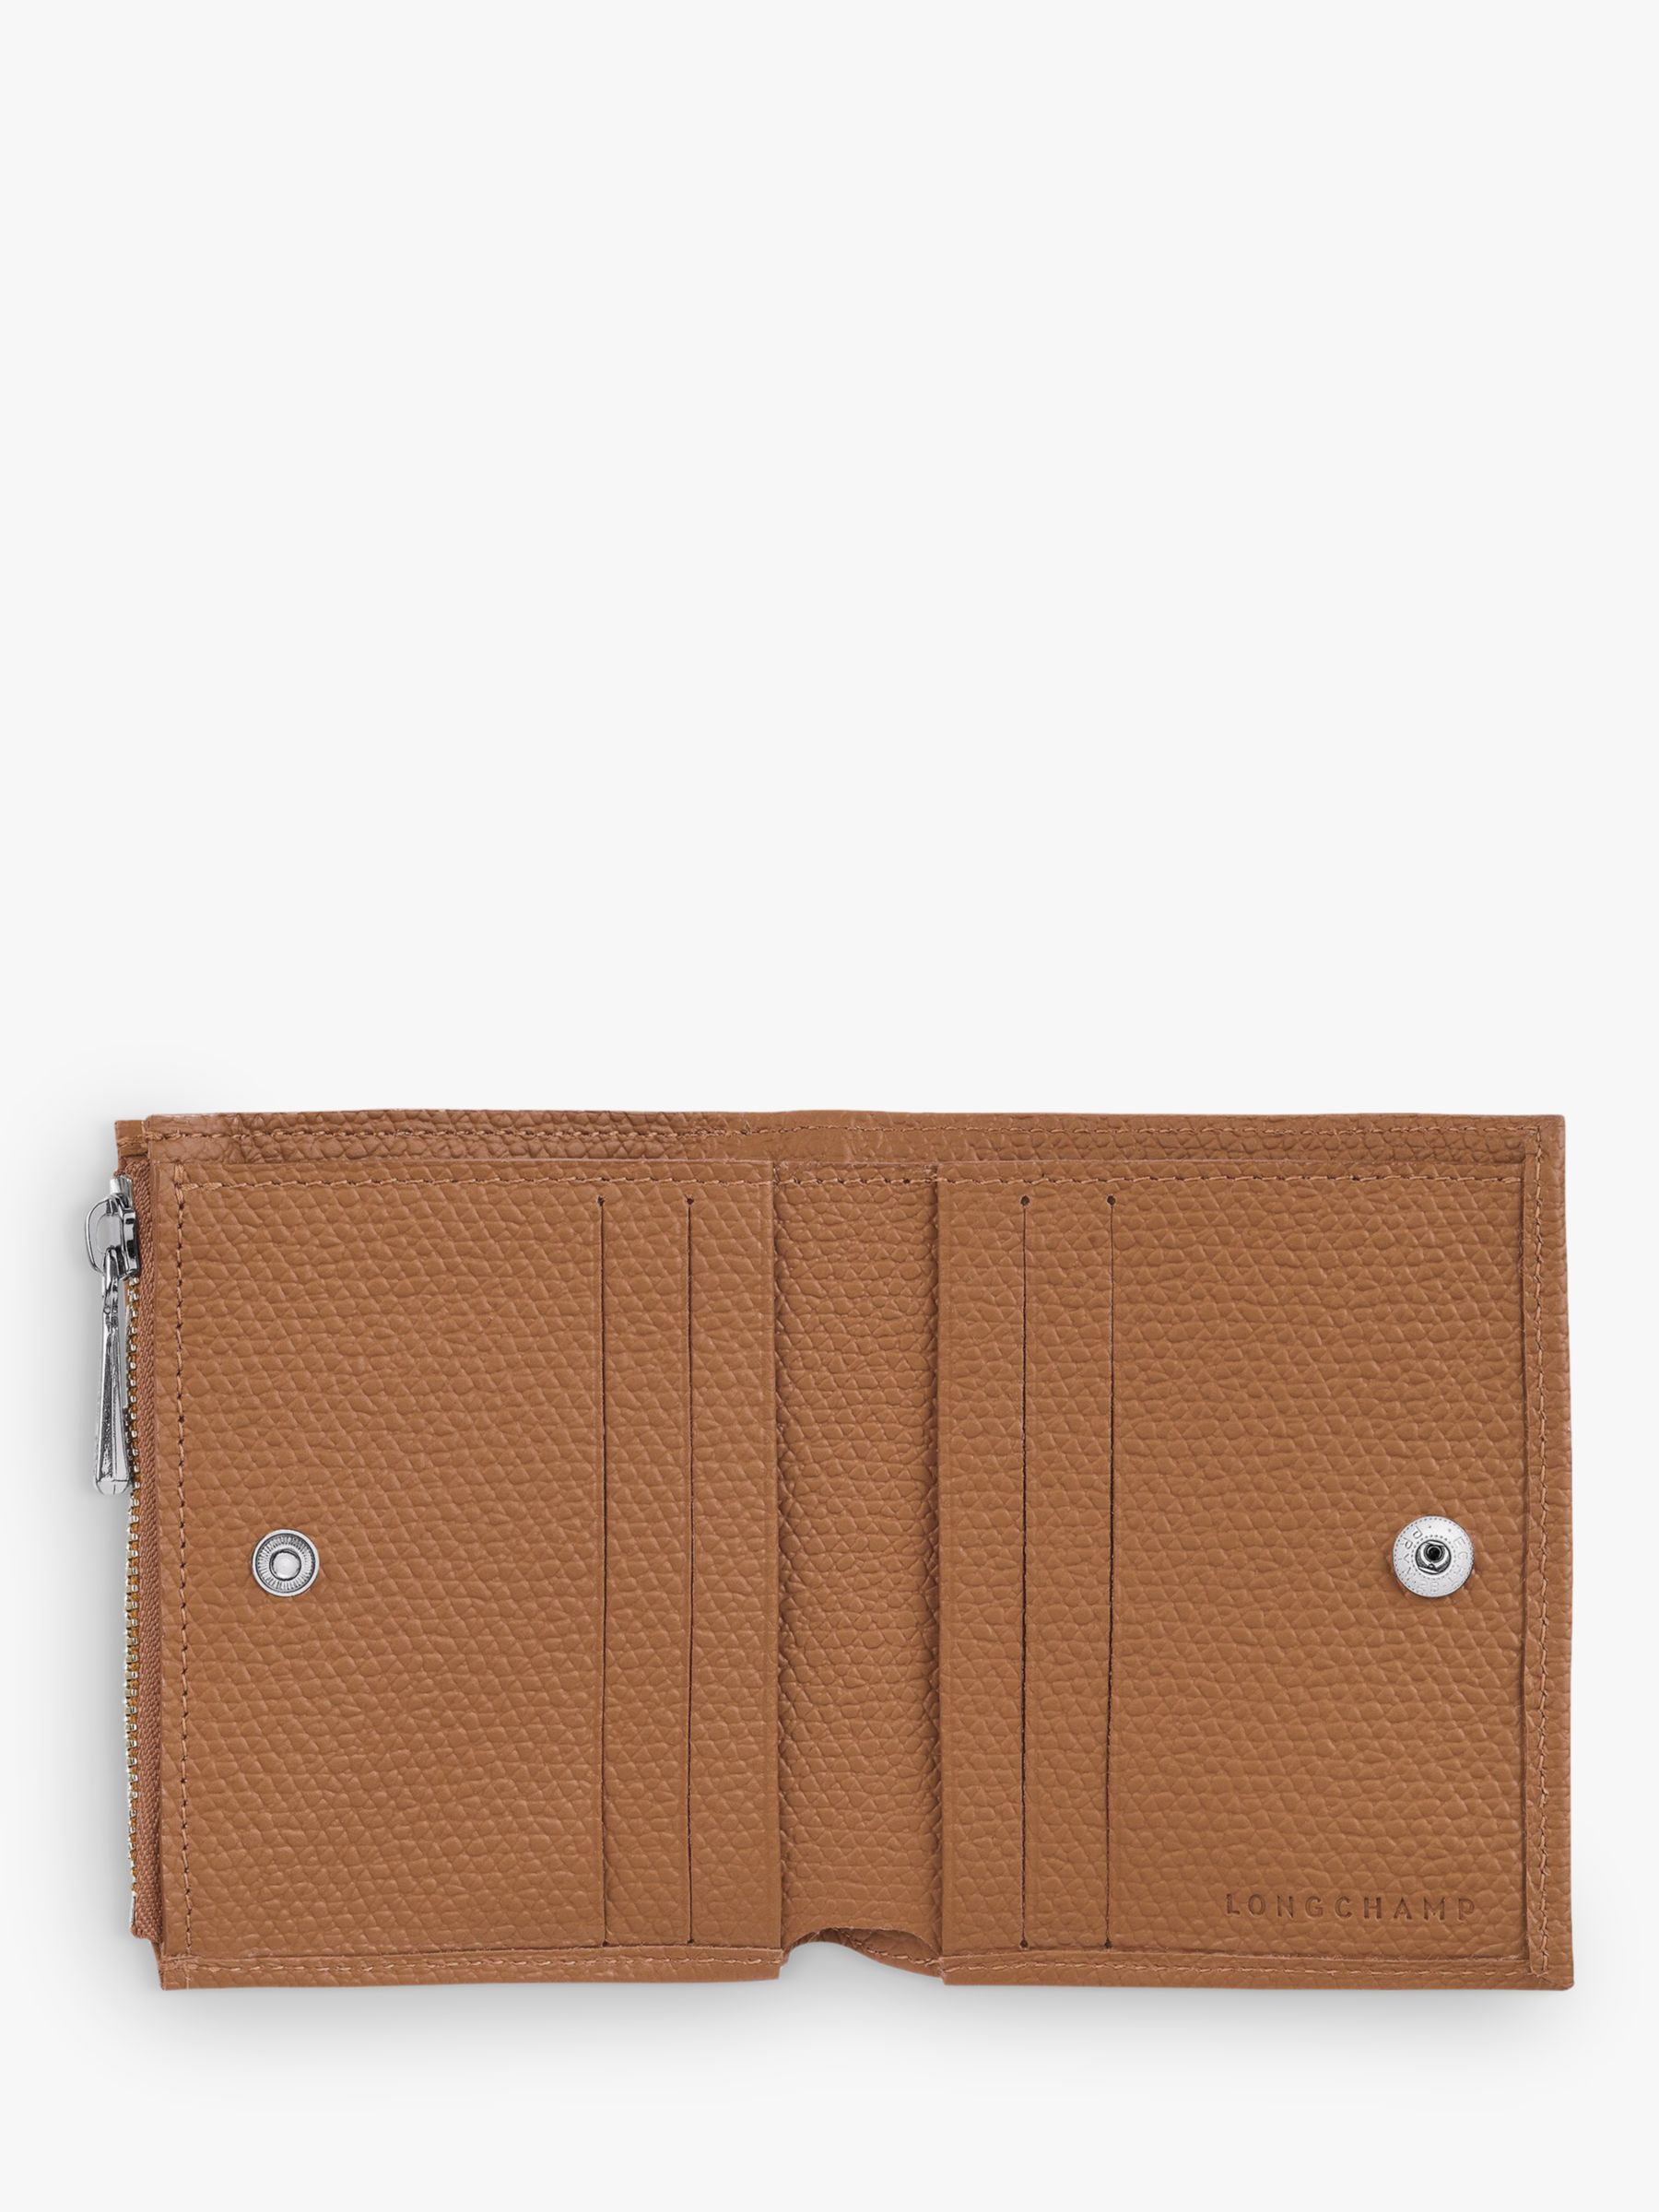 Longchamp Roseau Leather Compact Wallet, Natural at John Lewis & Partners